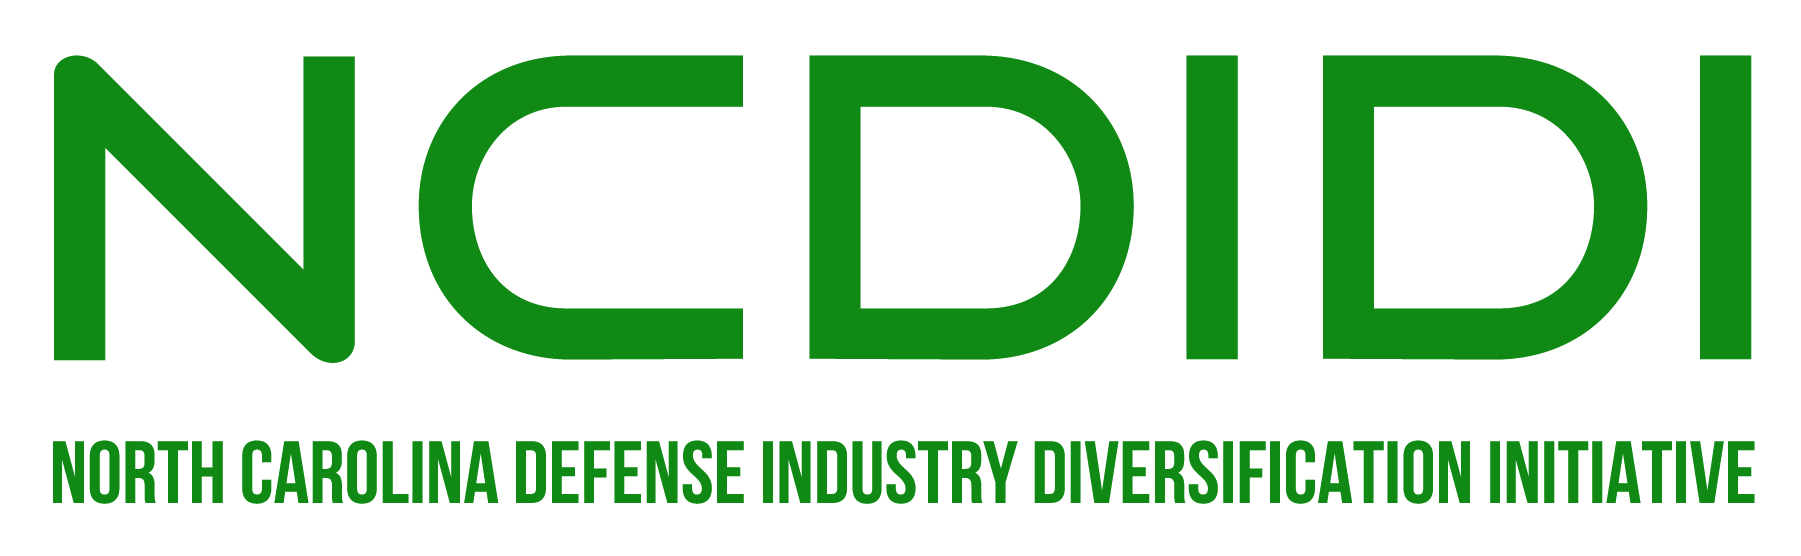 NCDIDI - NC Defense Industry Diversification Initiative